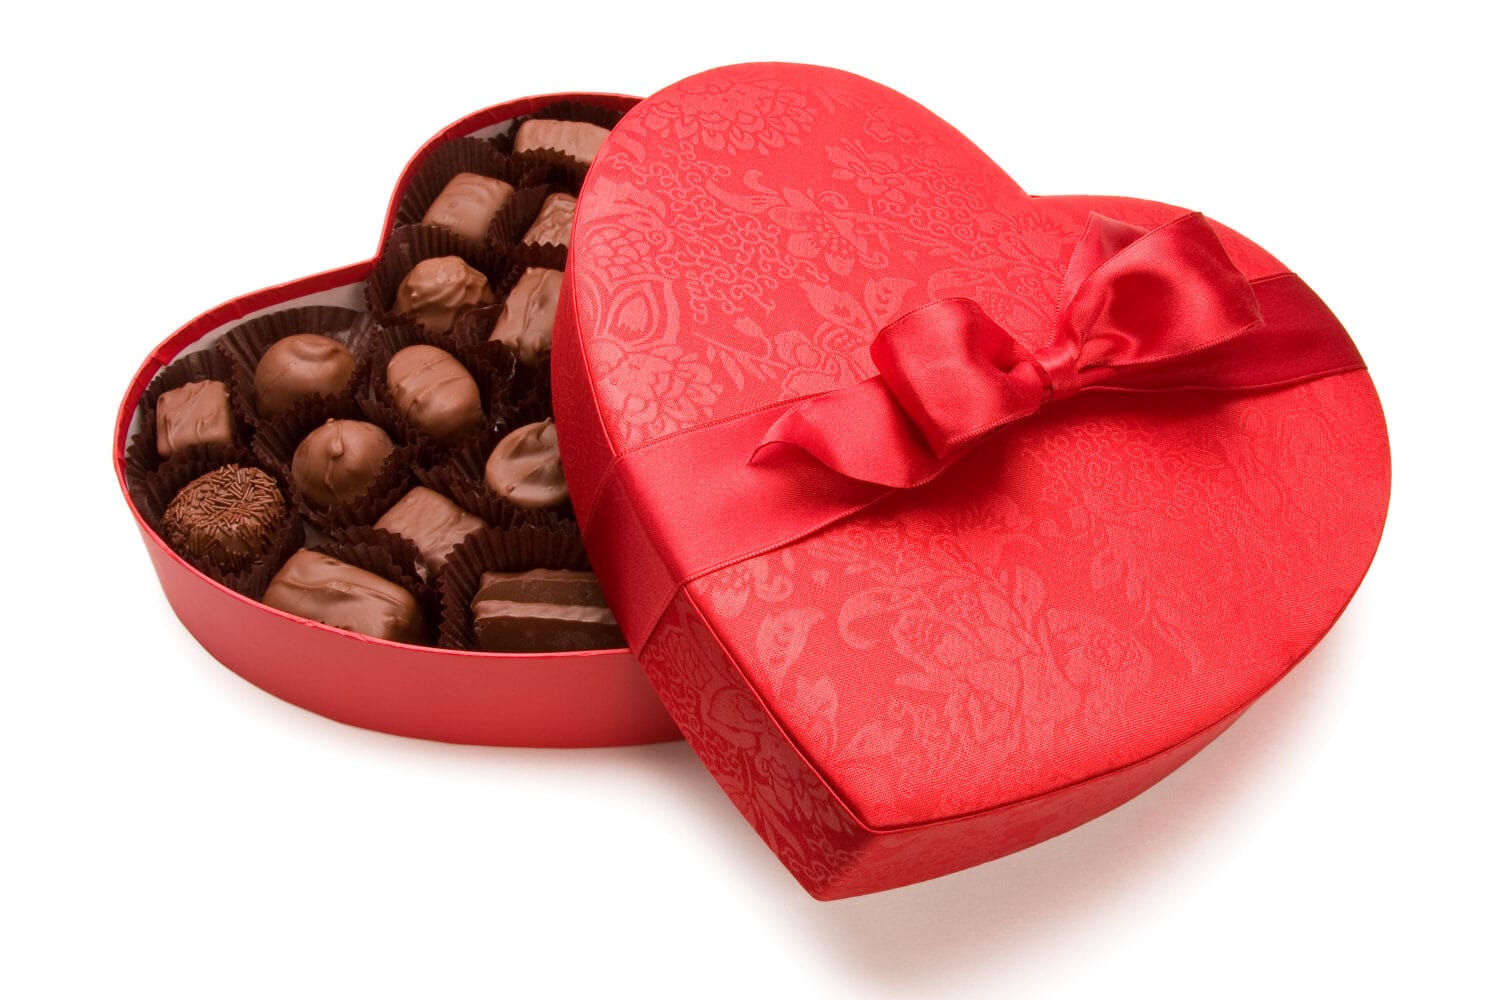 a box of Valentine's chocolate